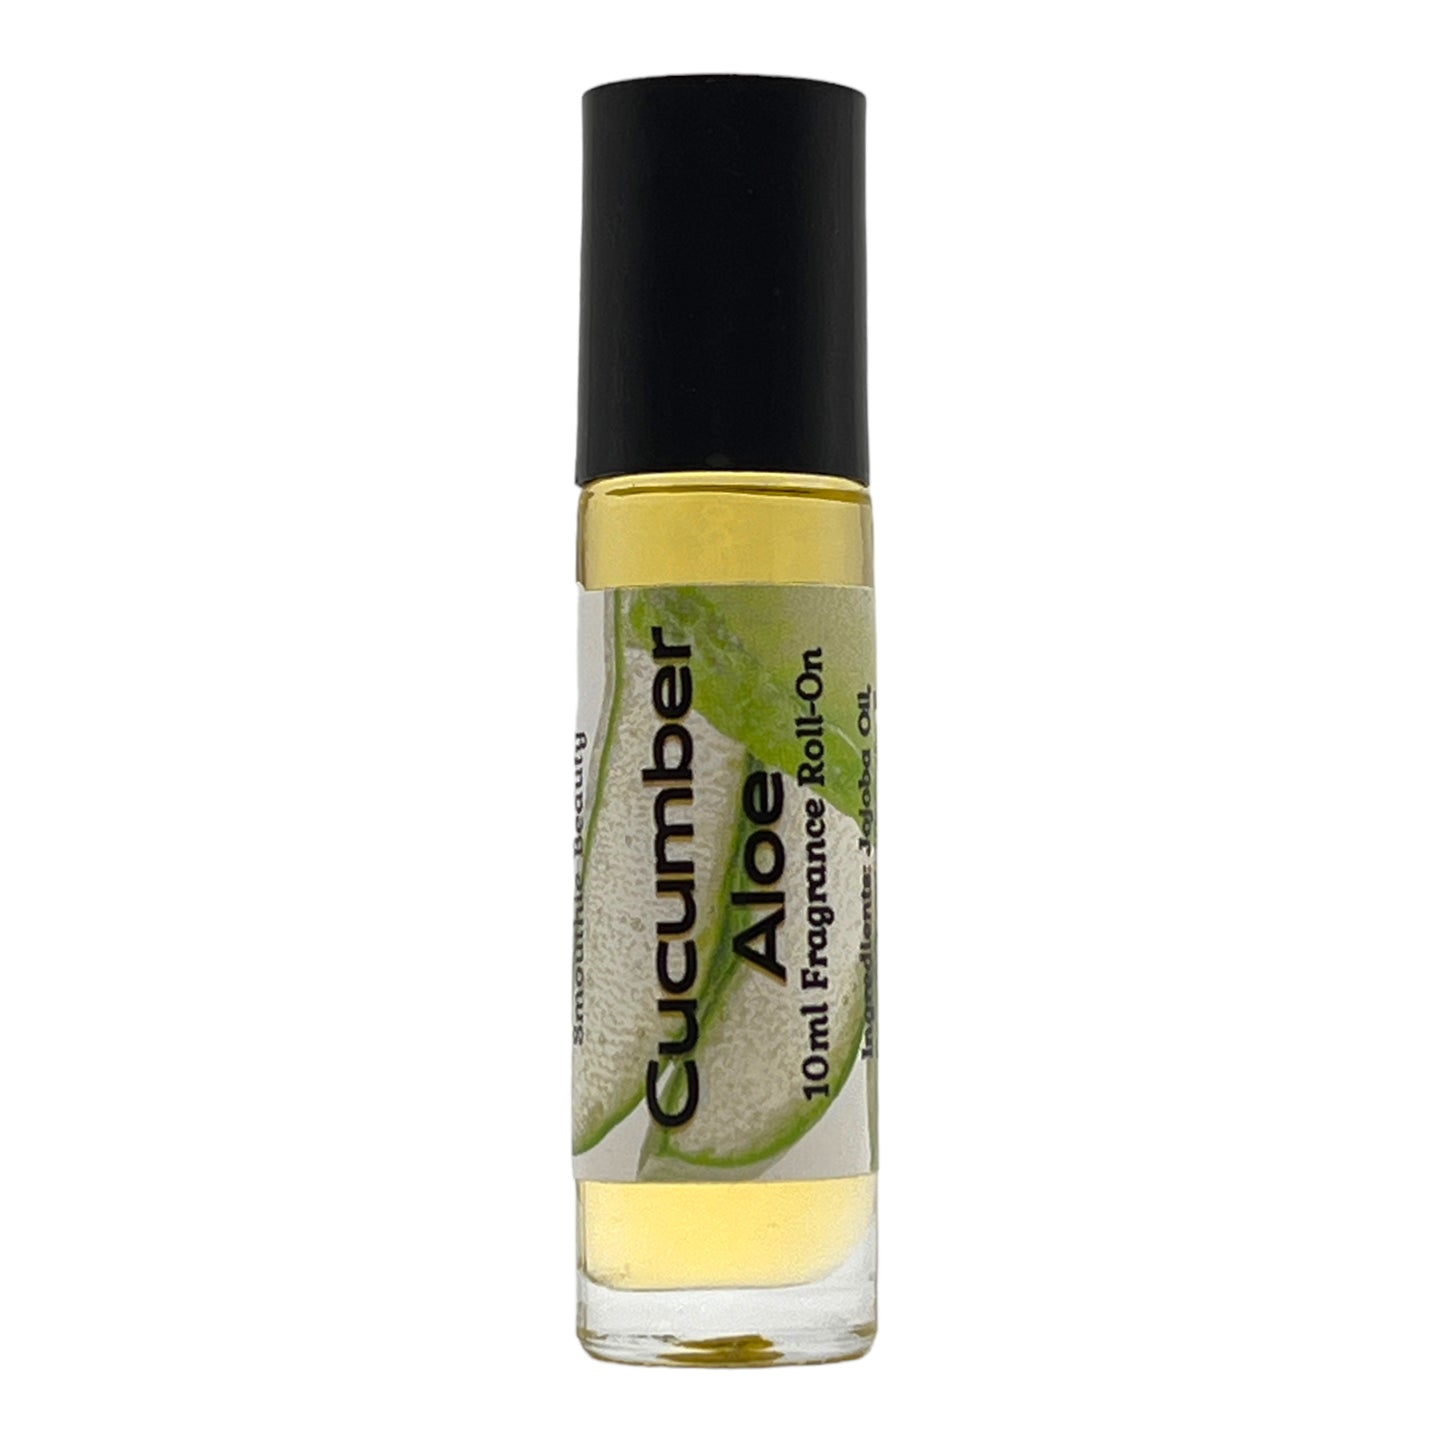 Cucumber & Aloe Perfume Oil Fragrance Roll On